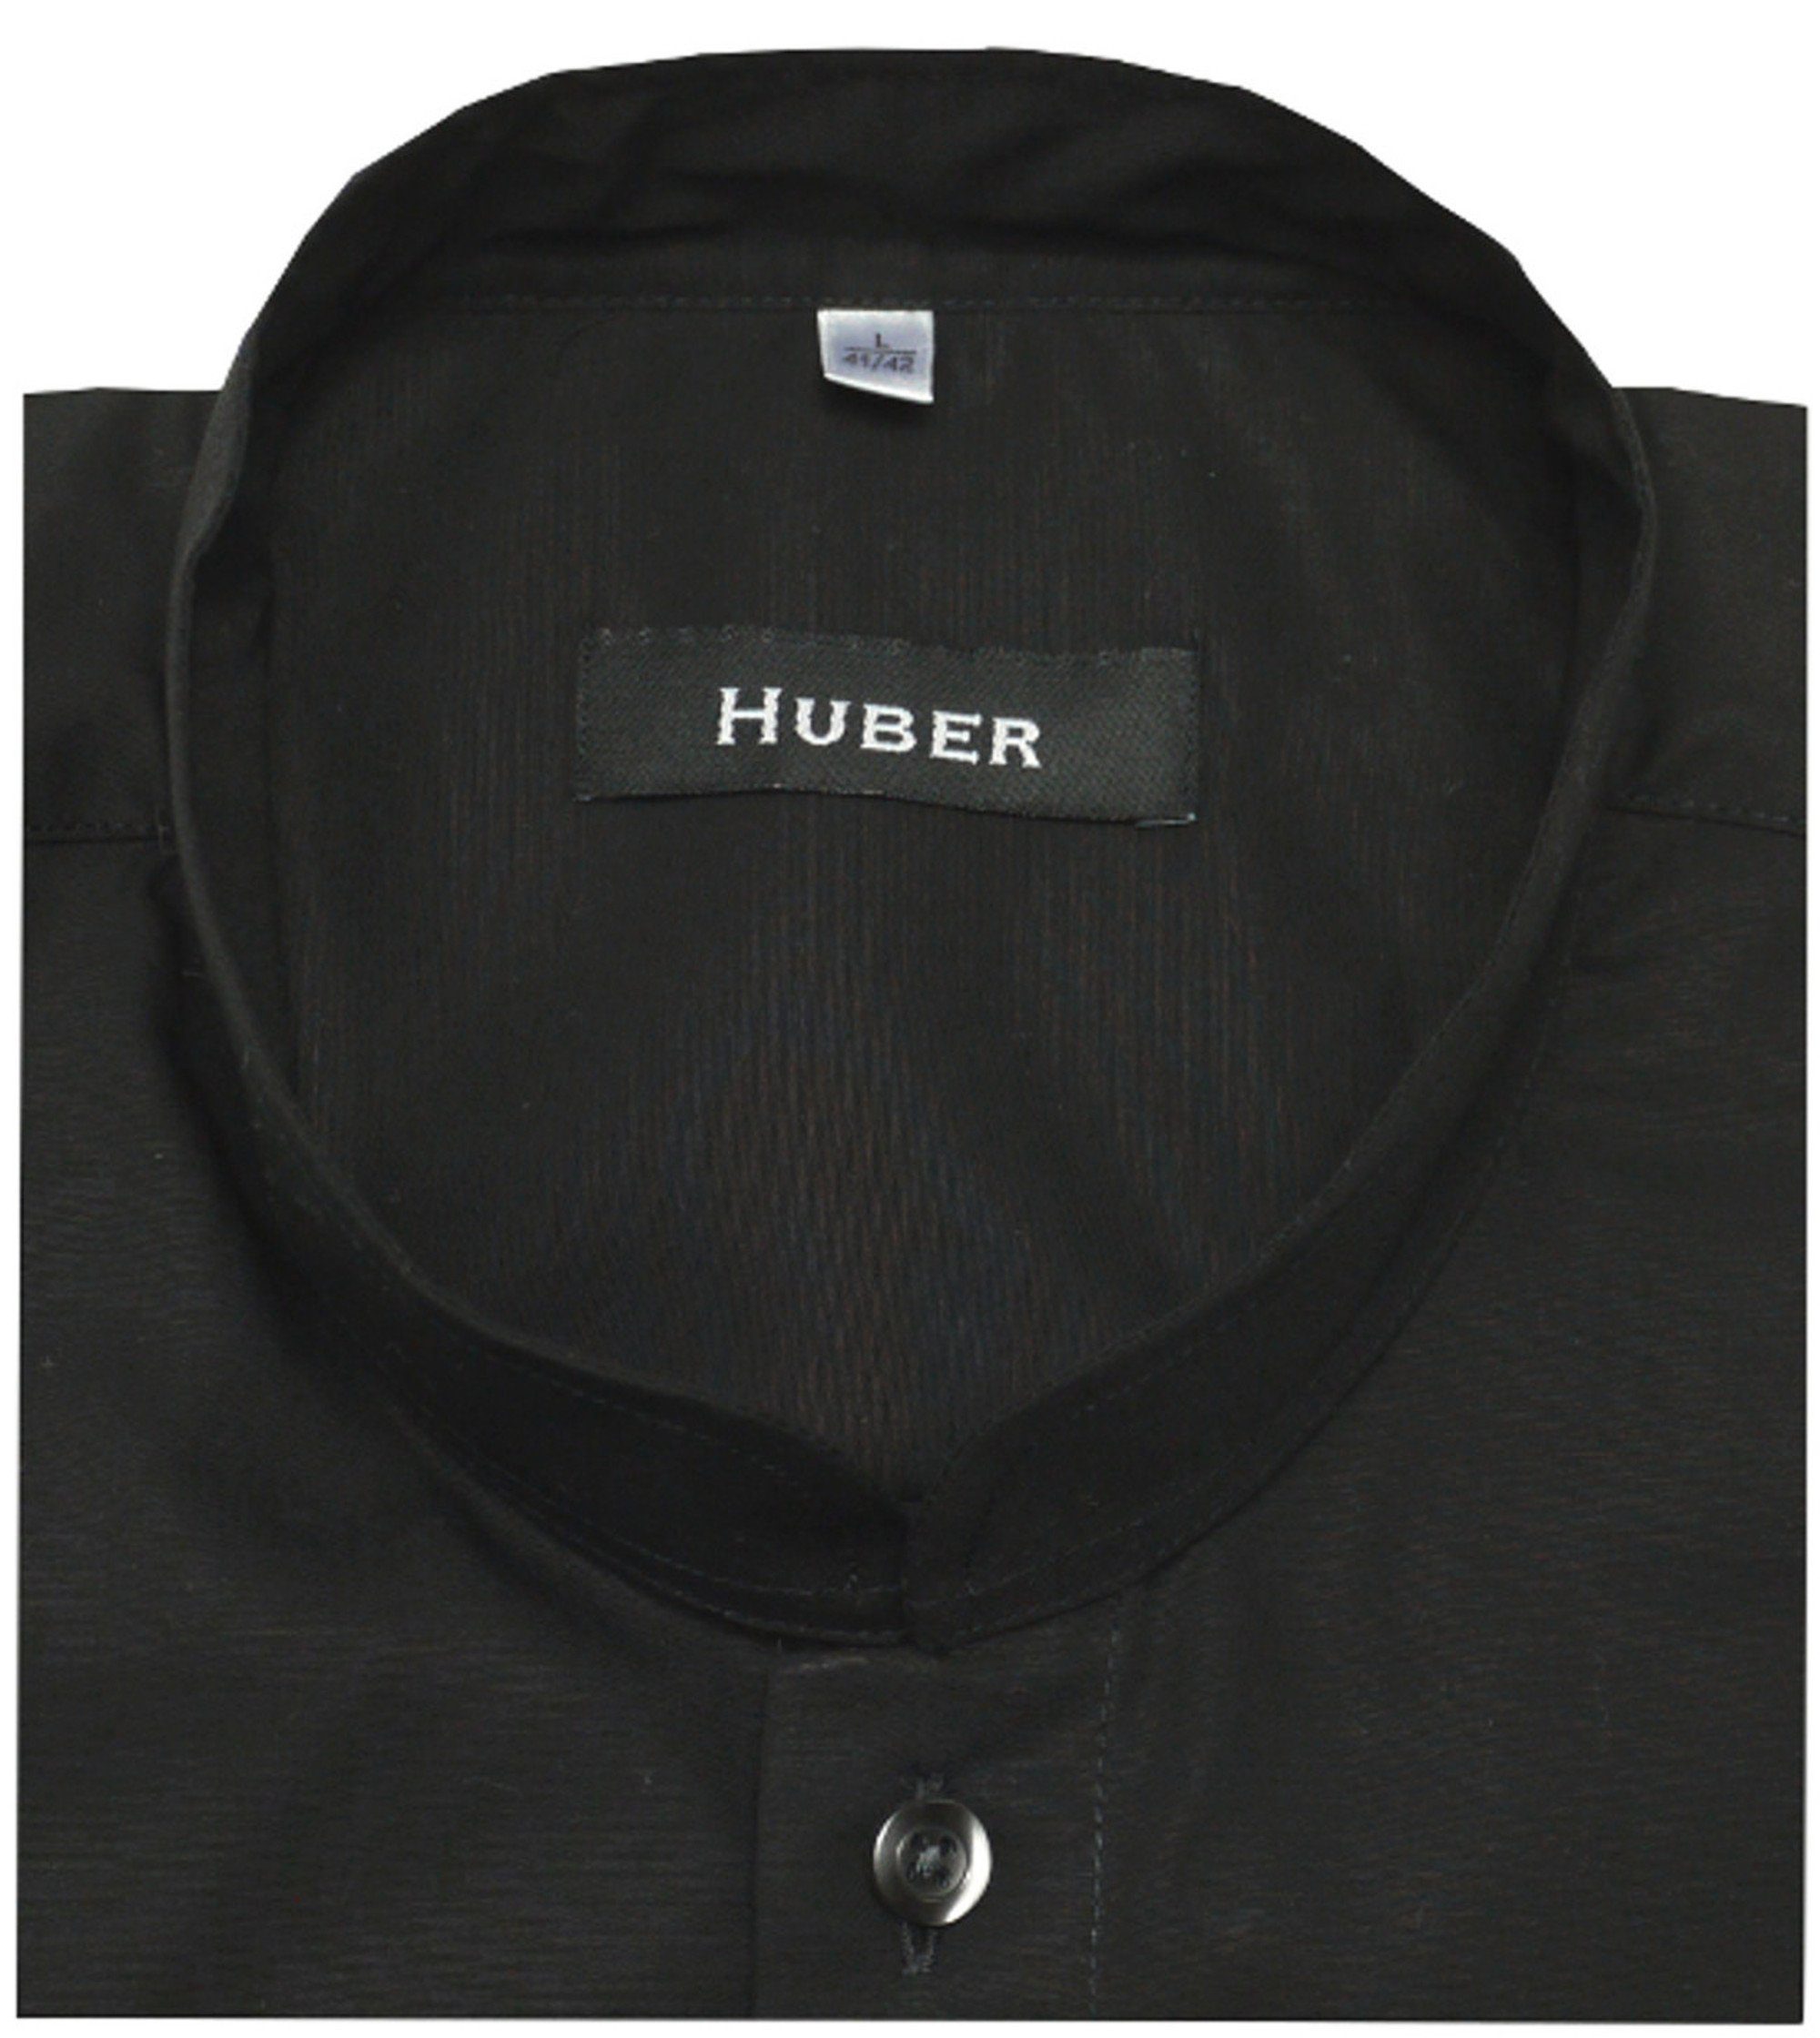 Huber Hemden Made Mandarin Fit-gerader HU-0071 Langarmhemd schwarz in Stehkragen, EU Asia Schnitt, Regular